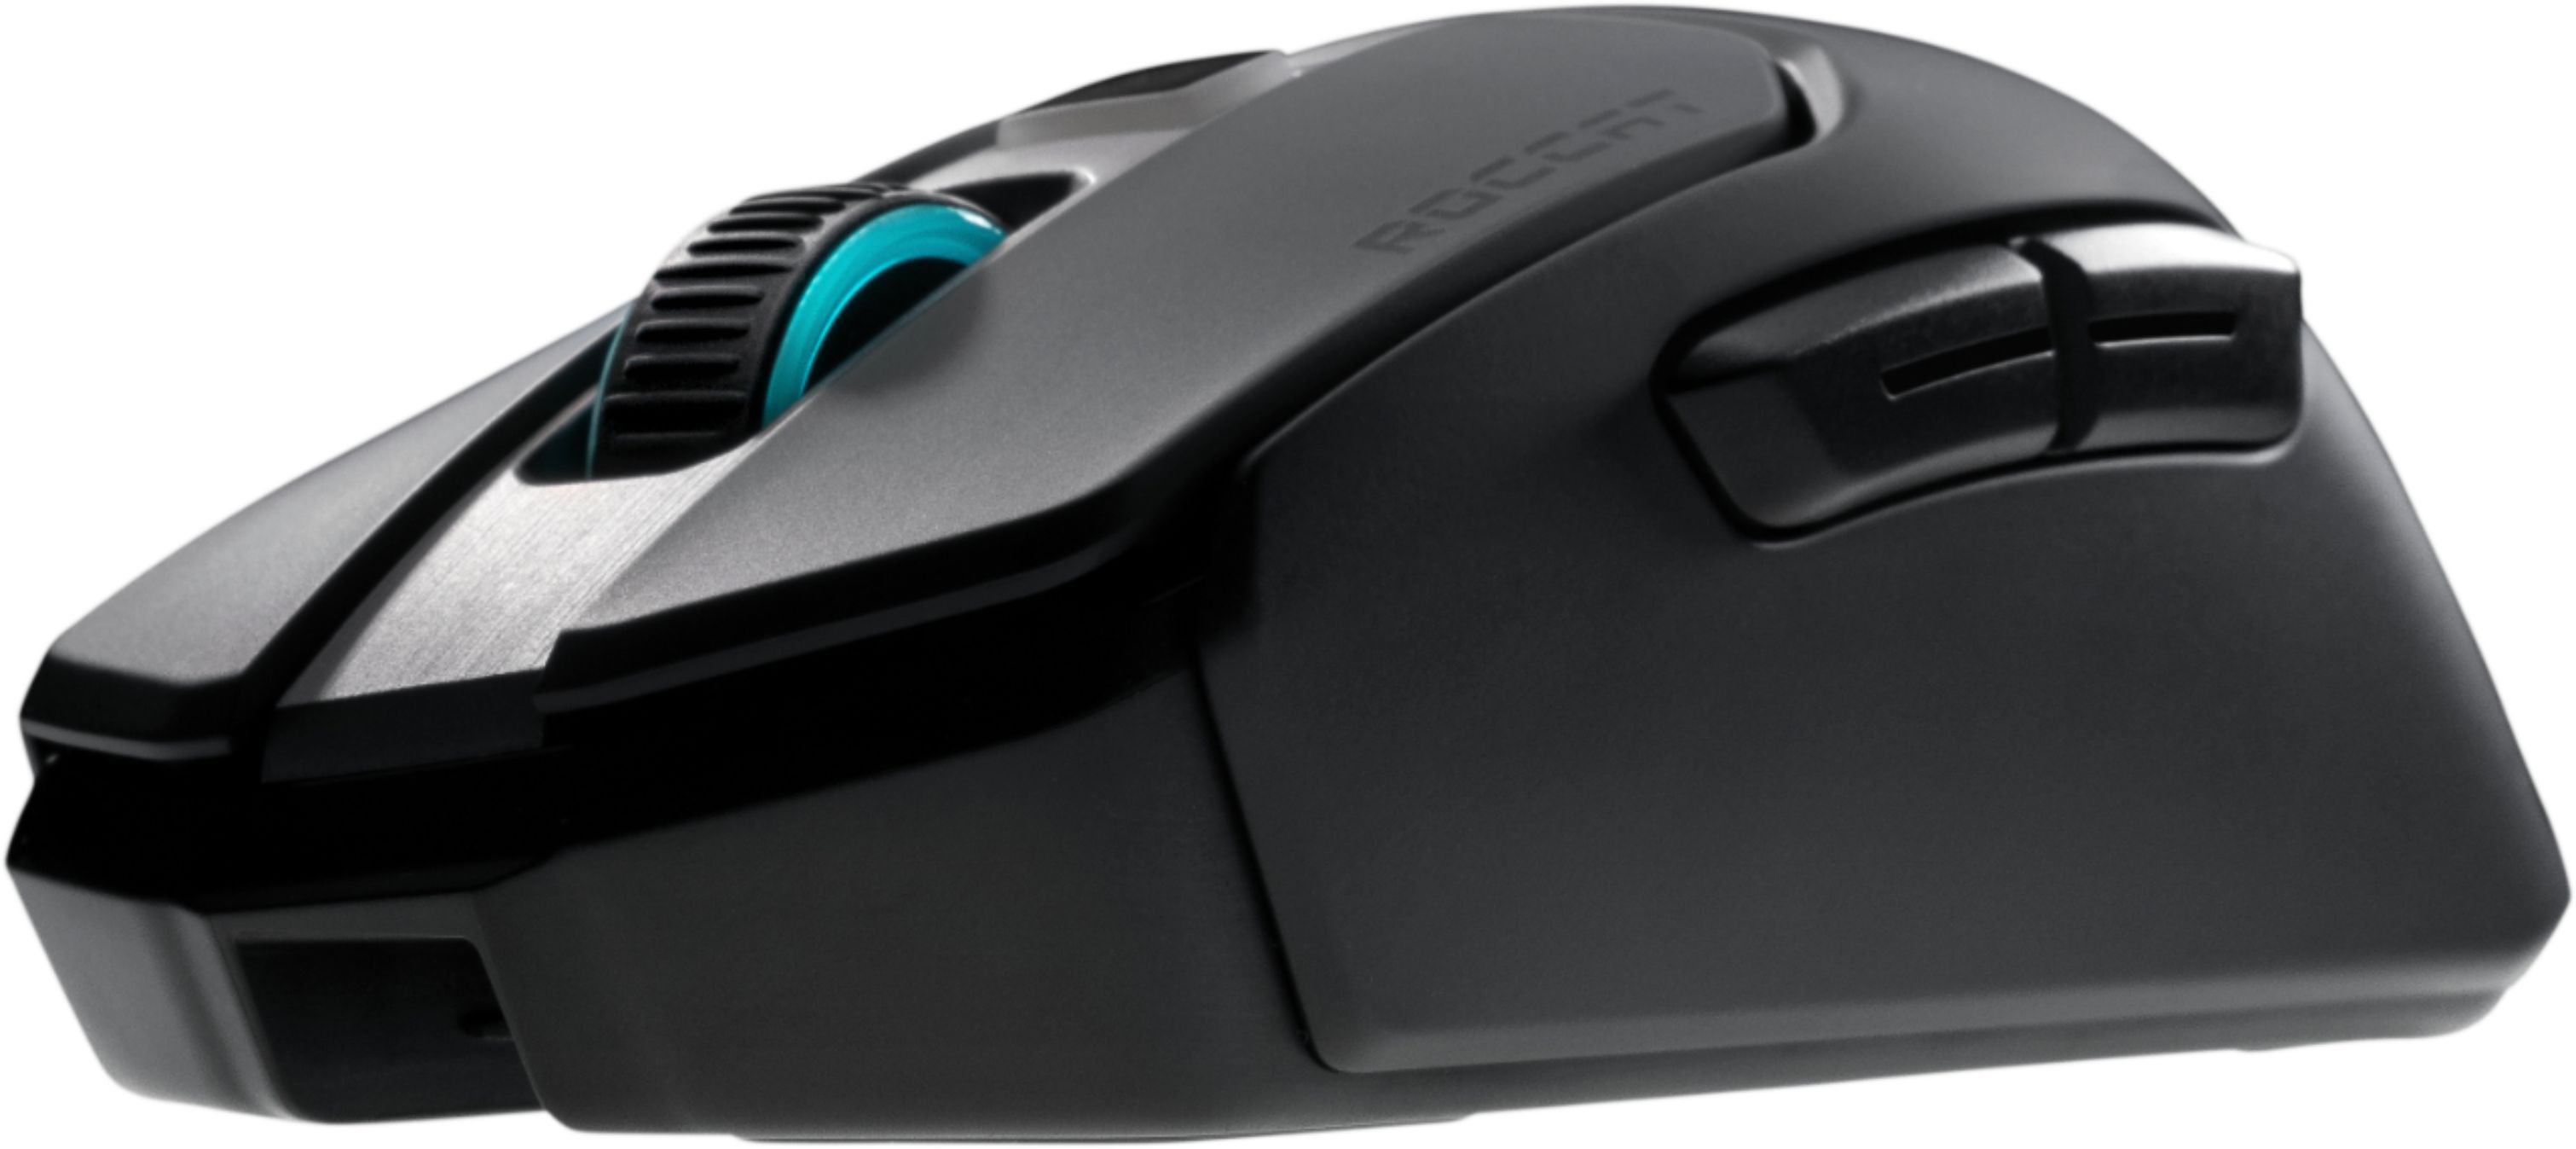 Customer Reviews Roccat Kain 0 Aimo Wireless Rgb 105 Gram 16k Dpi Owl Eye Sensor Gaming Mouse With Titan Click Black Roc 11 615 Bk Best Buy